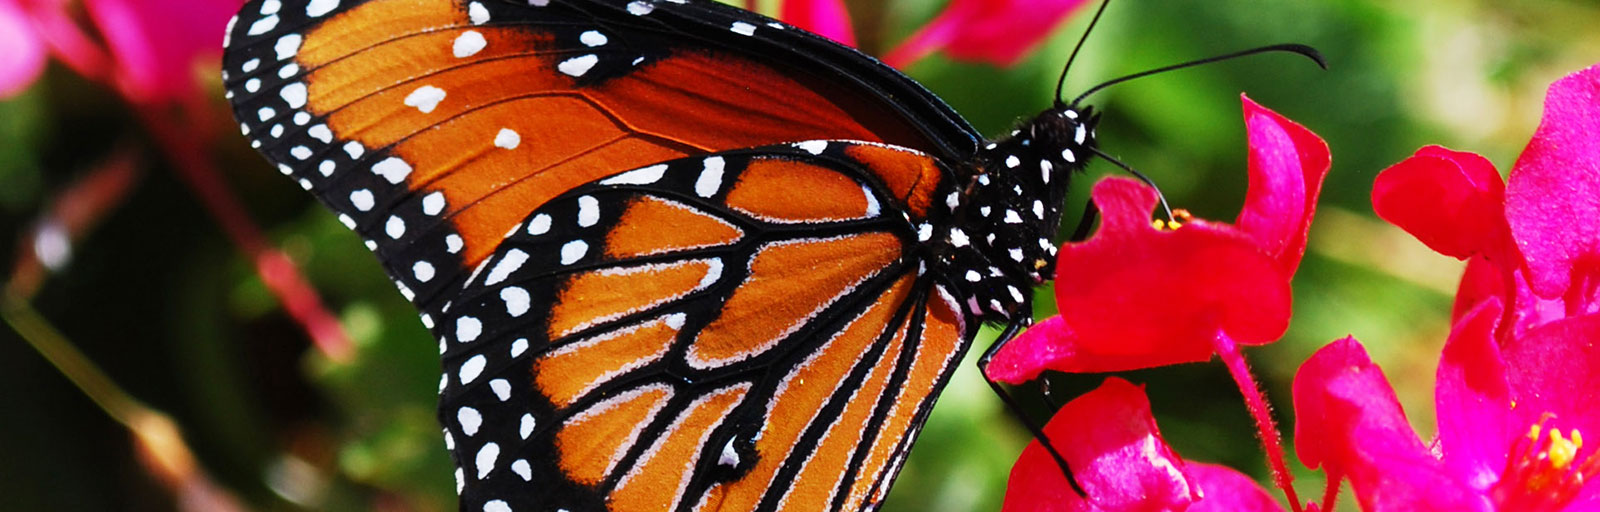 Yoga Retreat Scenics: Butterfly on a Flower